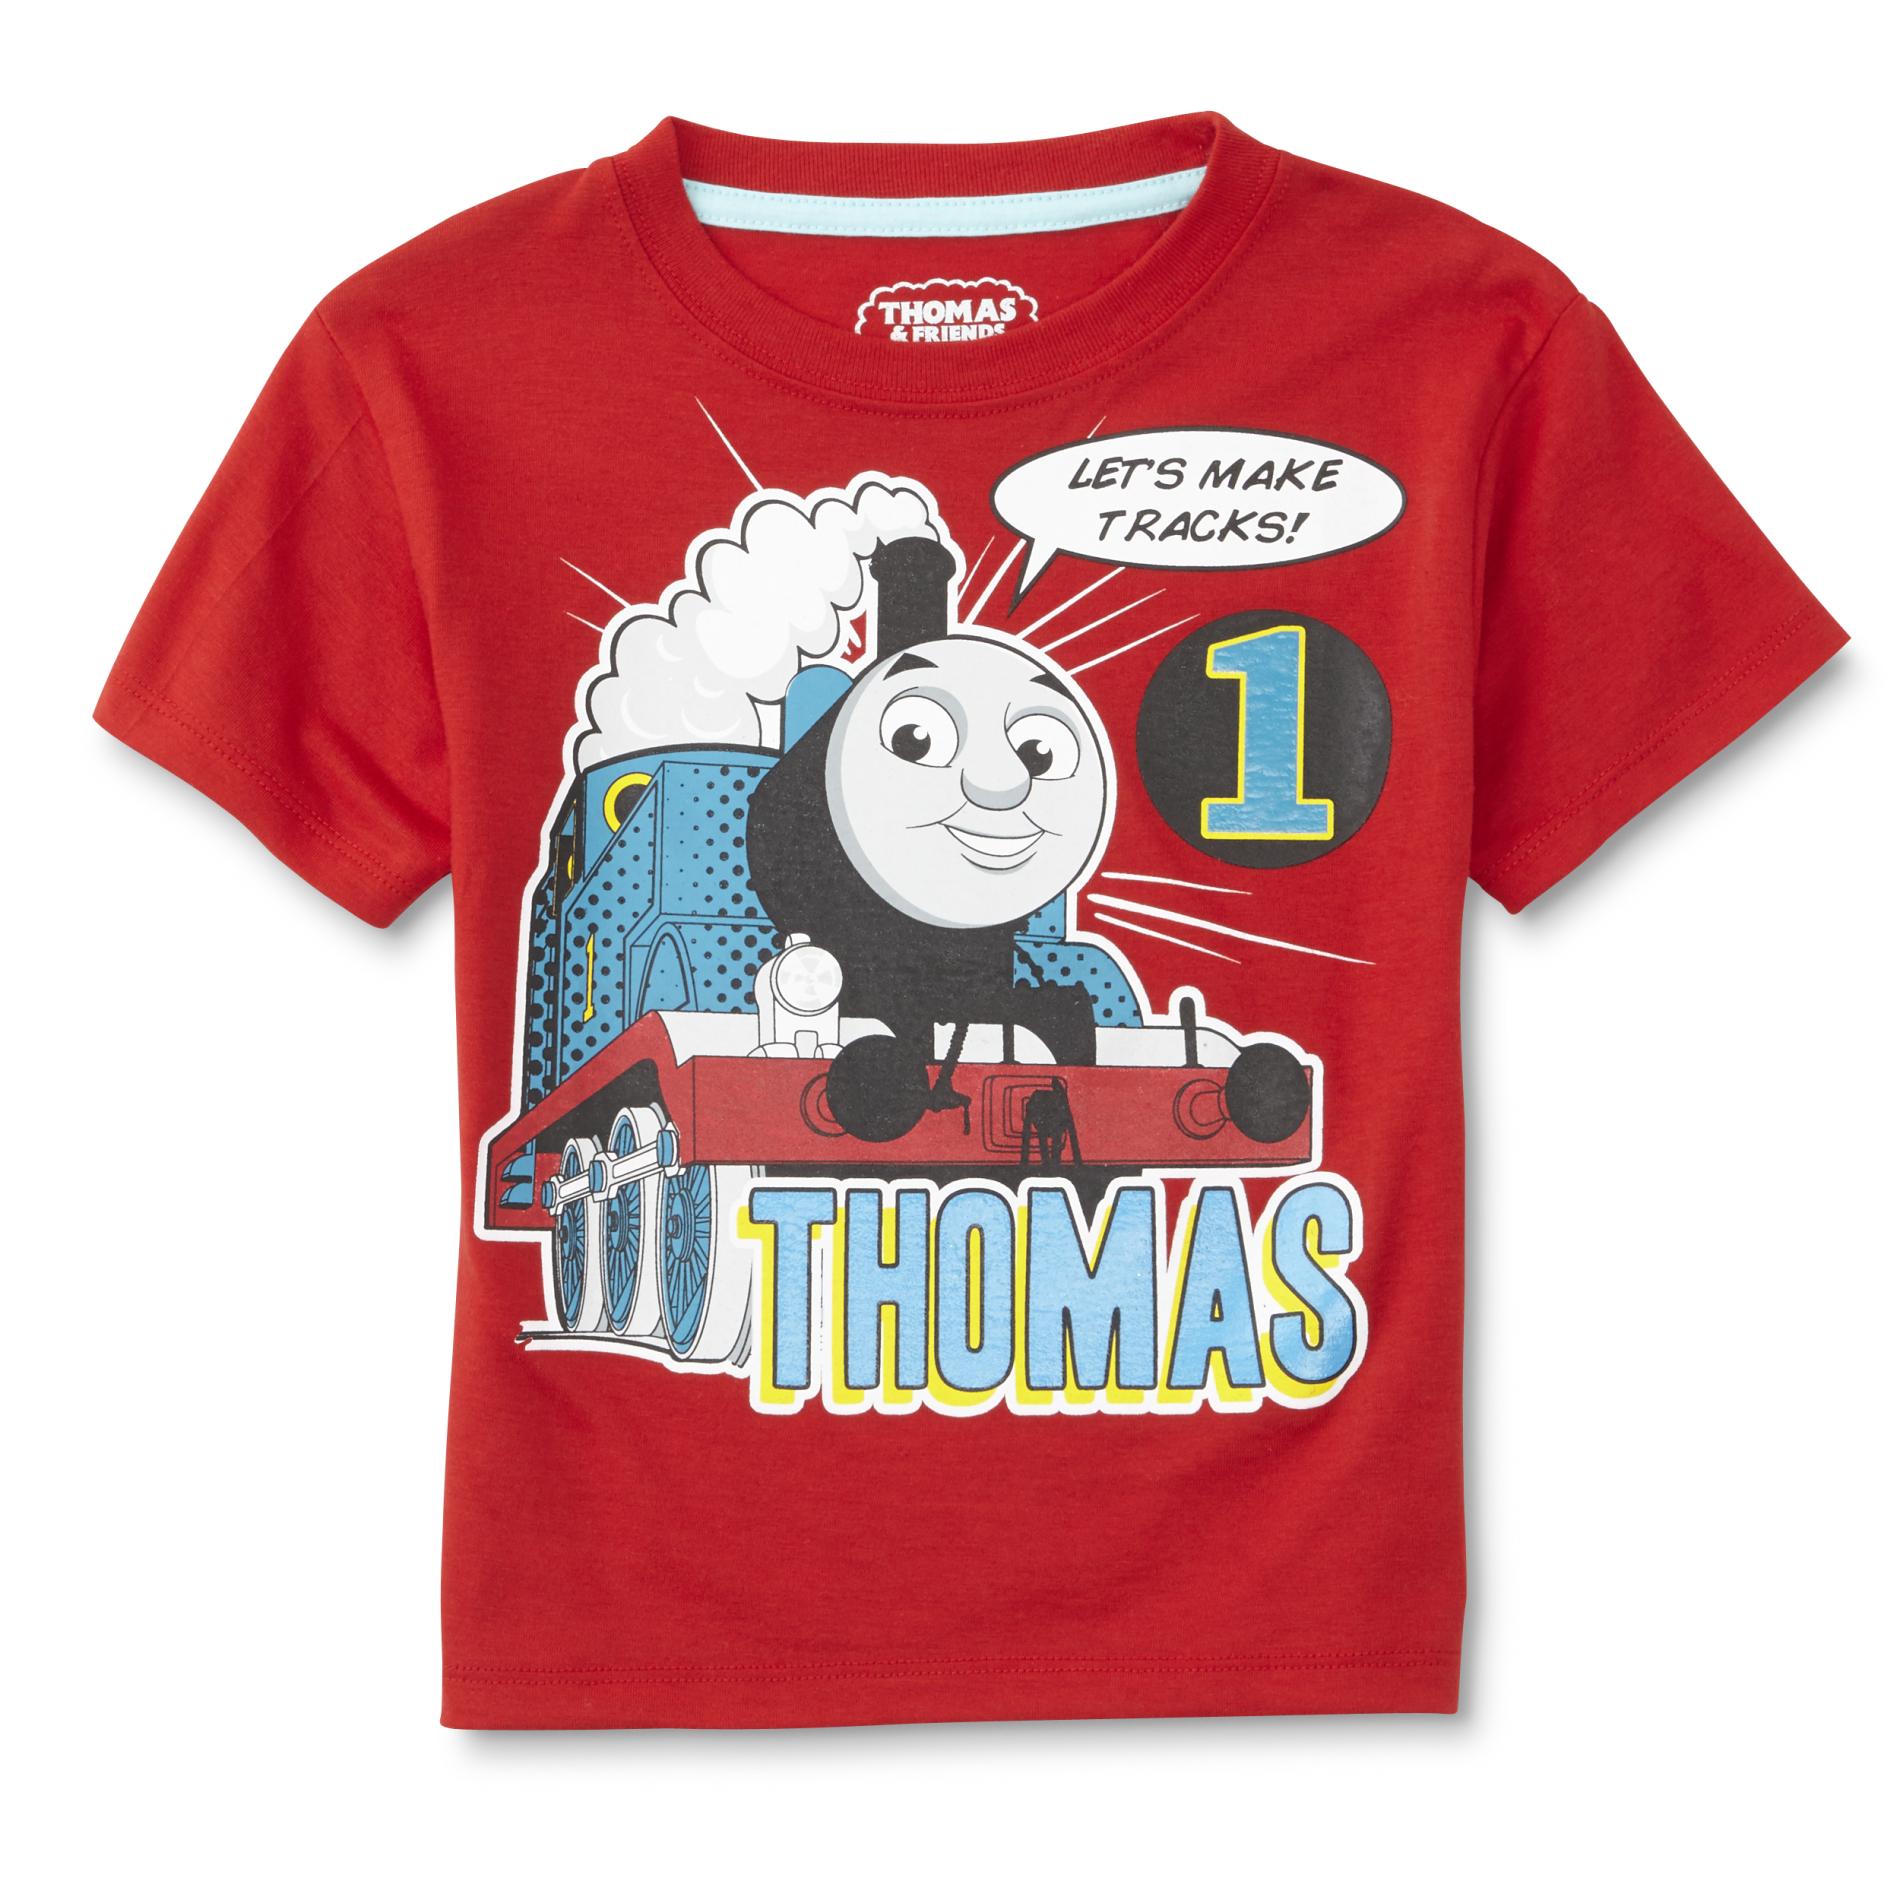 Thomas & Friends Thomas the Tank Engine Toddler Boys' Graphic T-Shirt